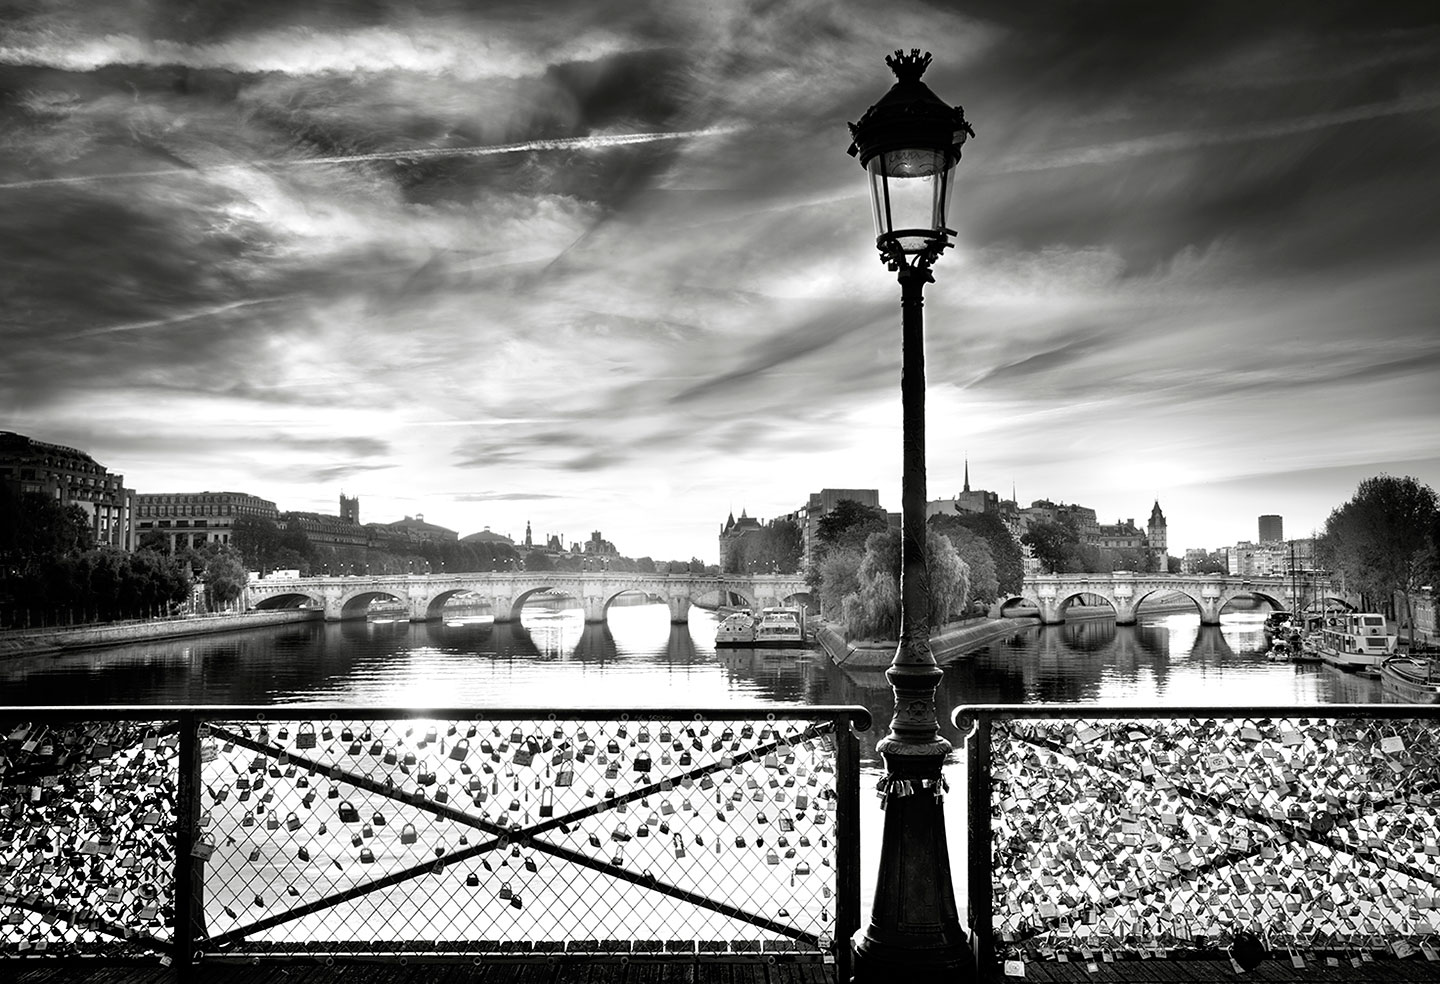 Lover locks, Pont des arts